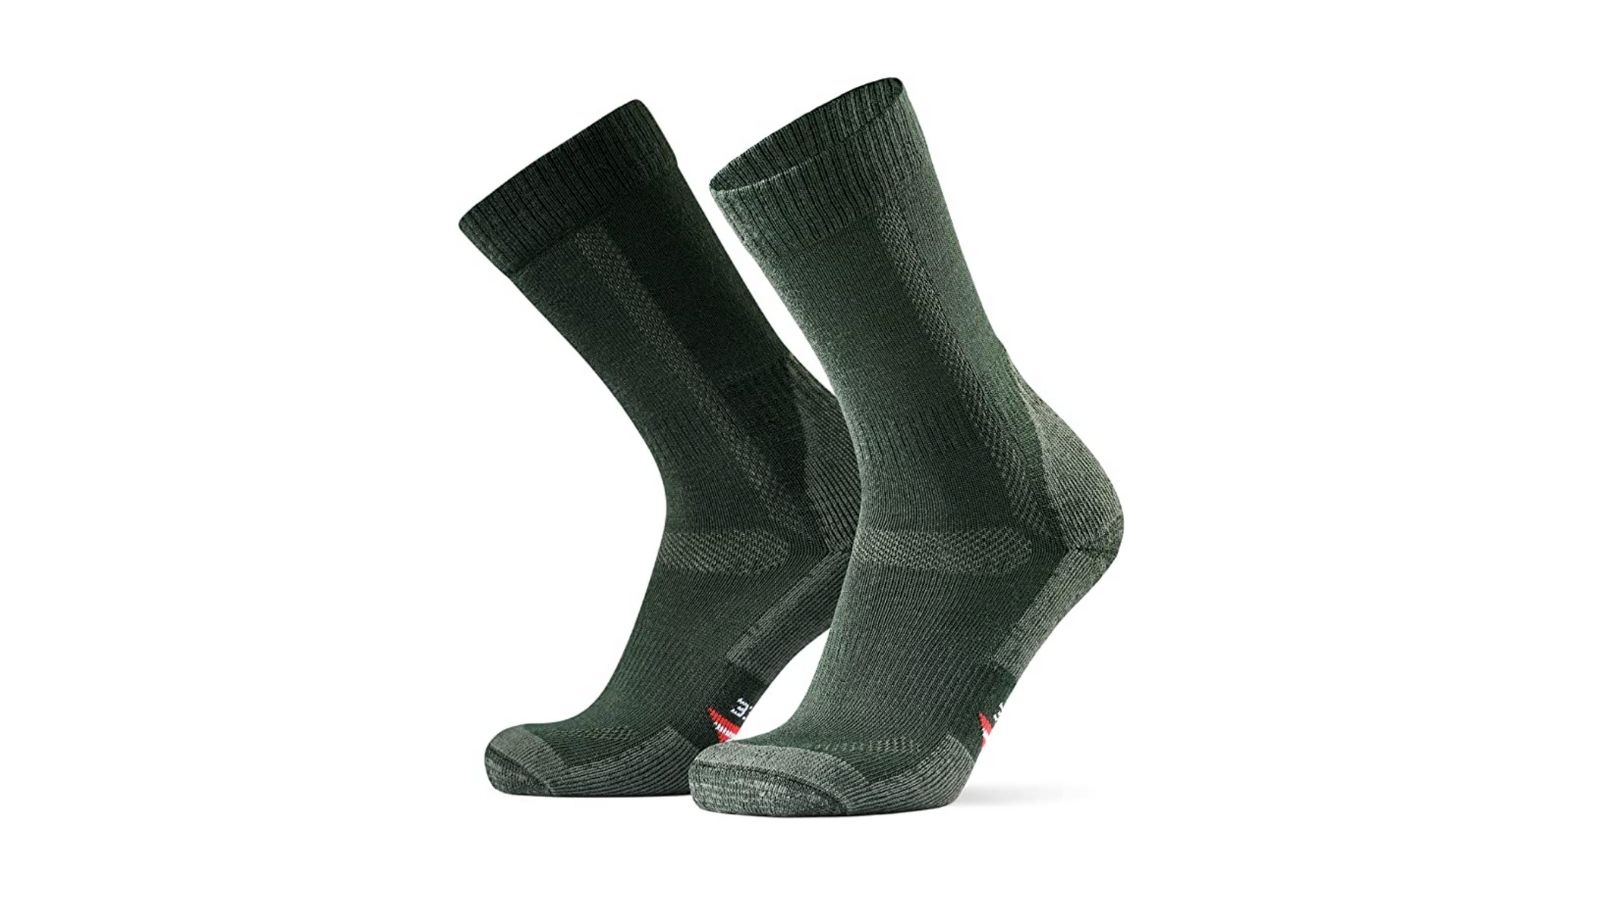 DANISH ENDURANCE Merino Wool Hiking Socks for Men & Women Crew Length &  Thermal 3 Pack Multicolor: Brown, Red, Green Large